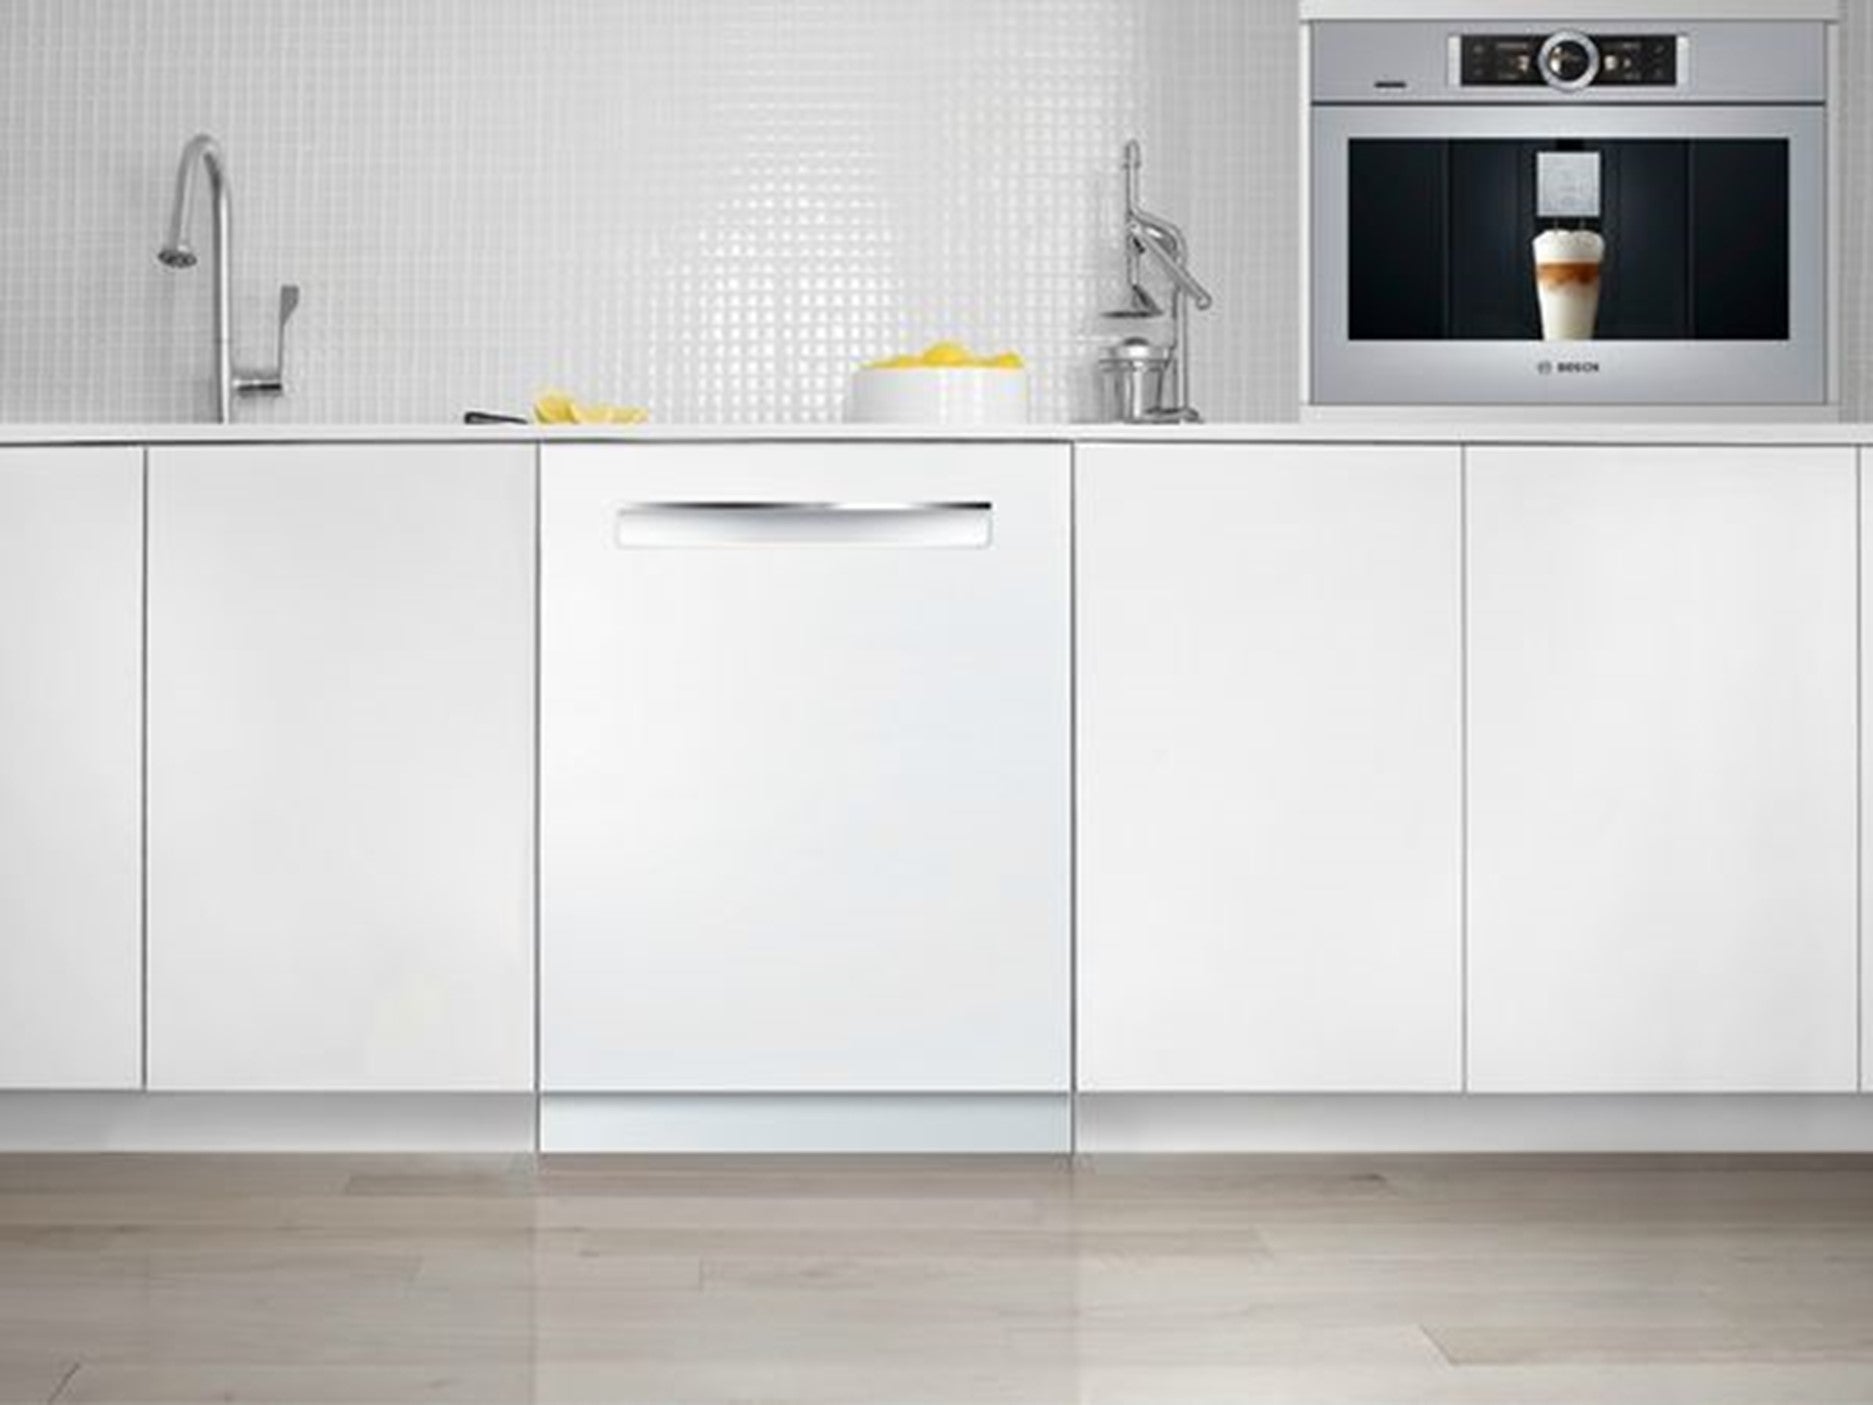 magnetic white dishwasher cover skin on dishwasher in white kitchen